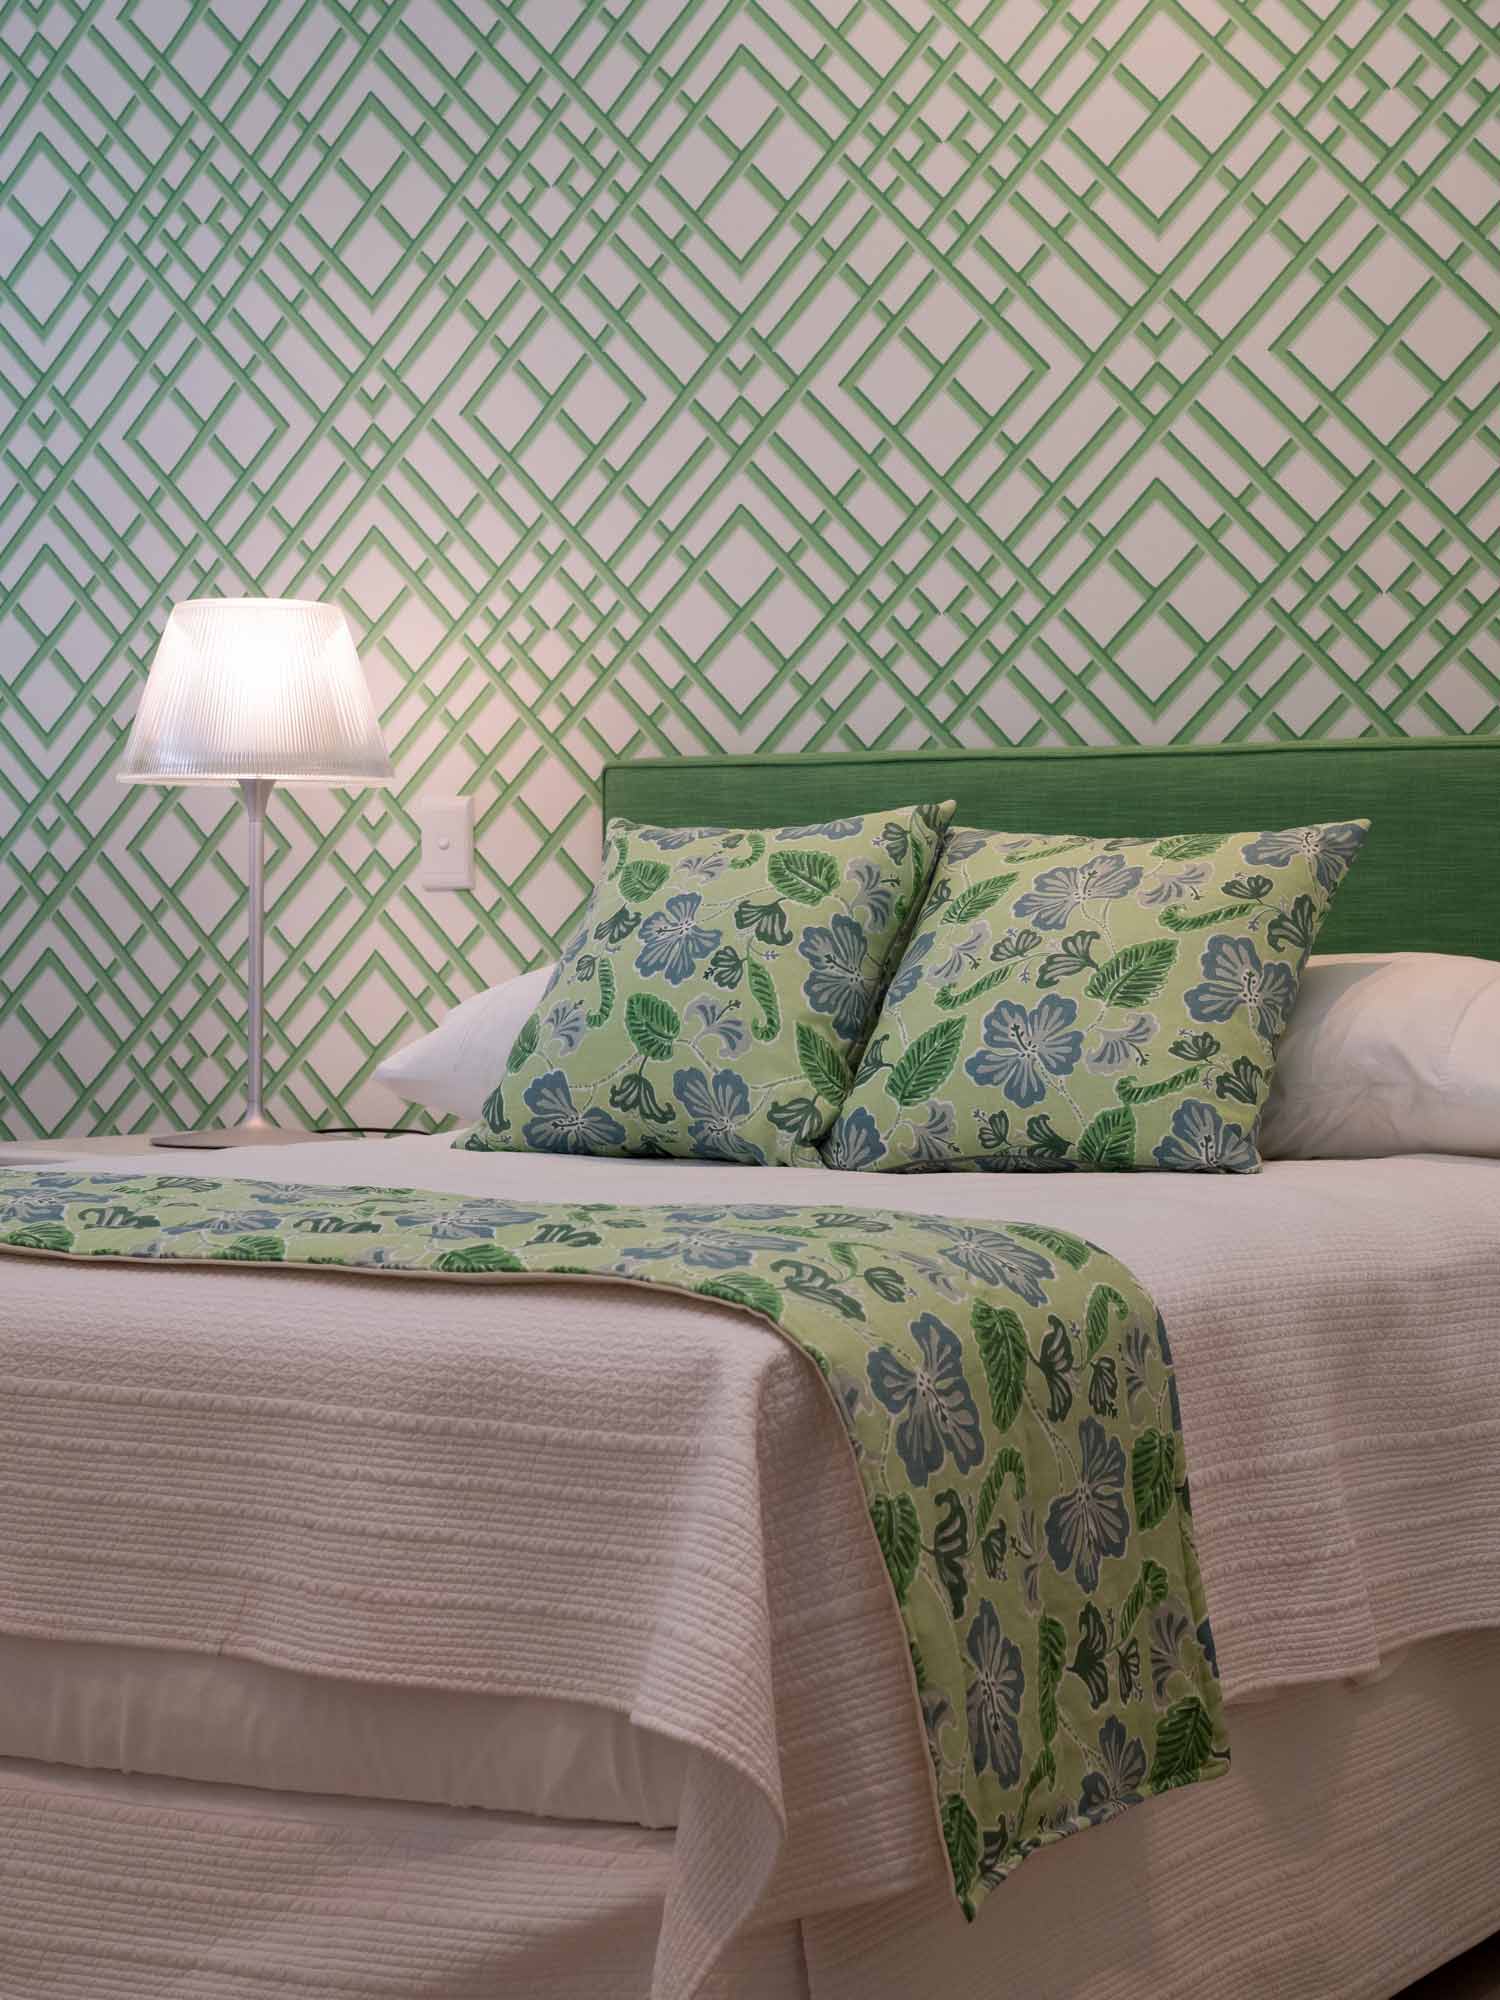 37 French bedroom interior design